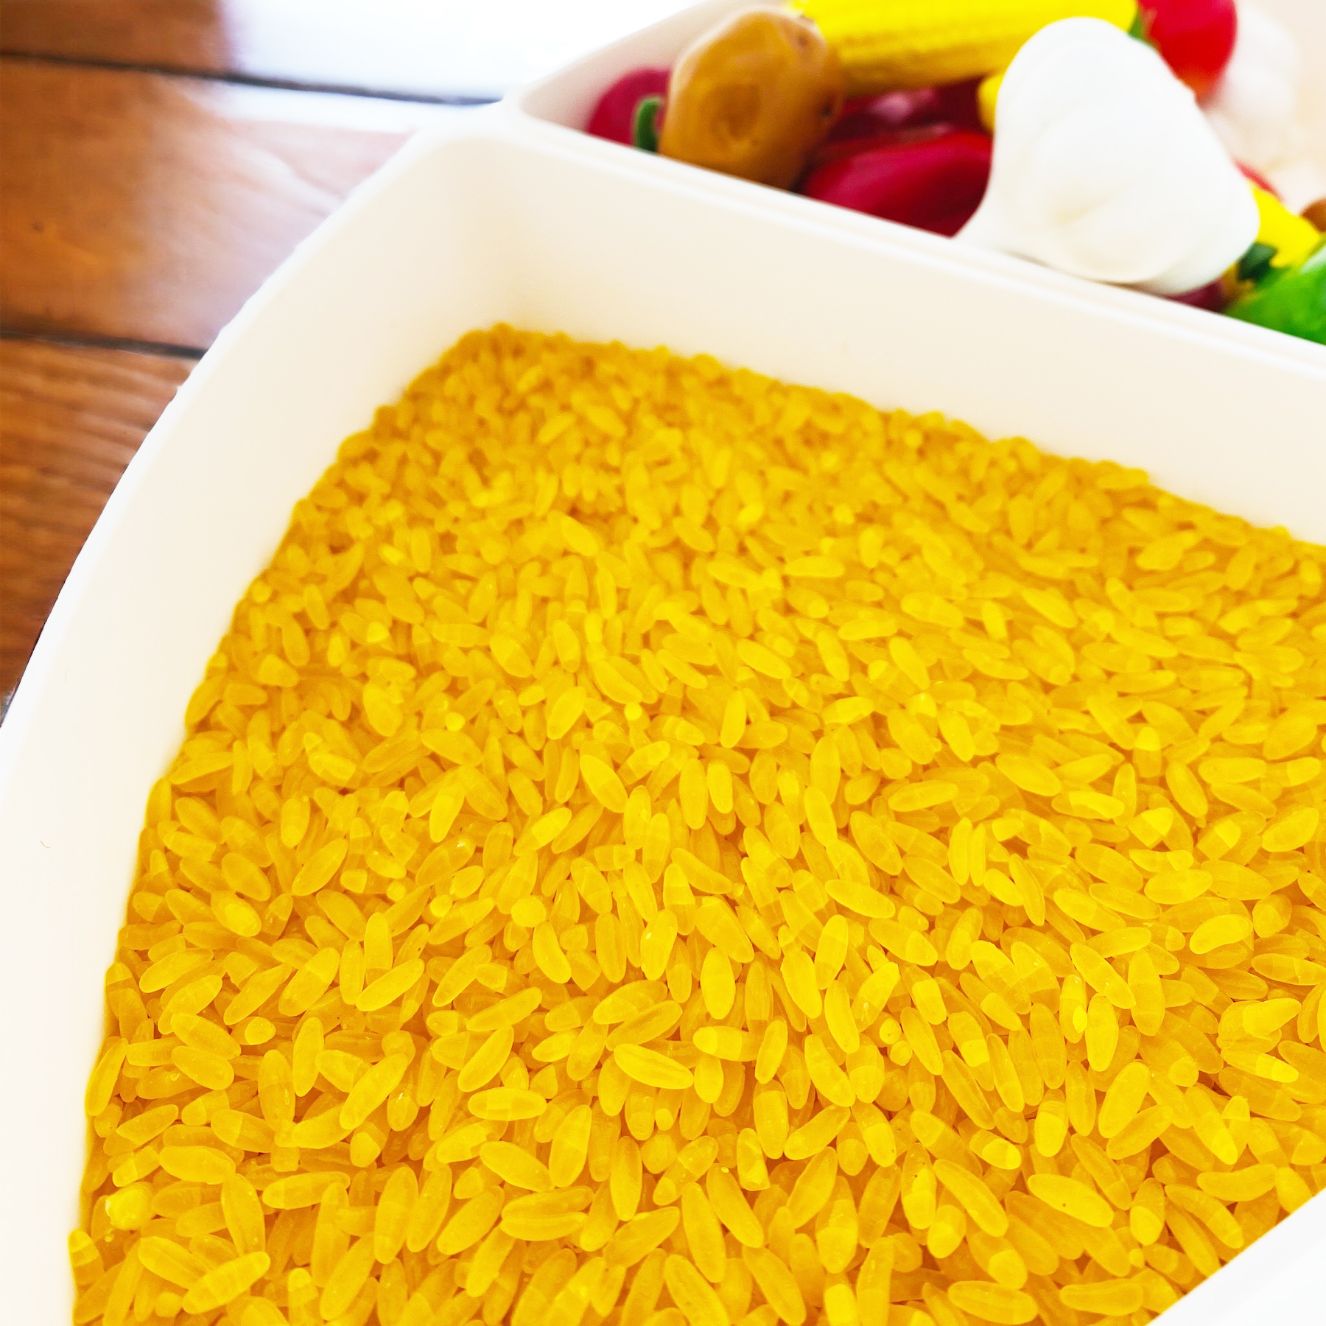 Edible Coloured Rice for Sensory Play